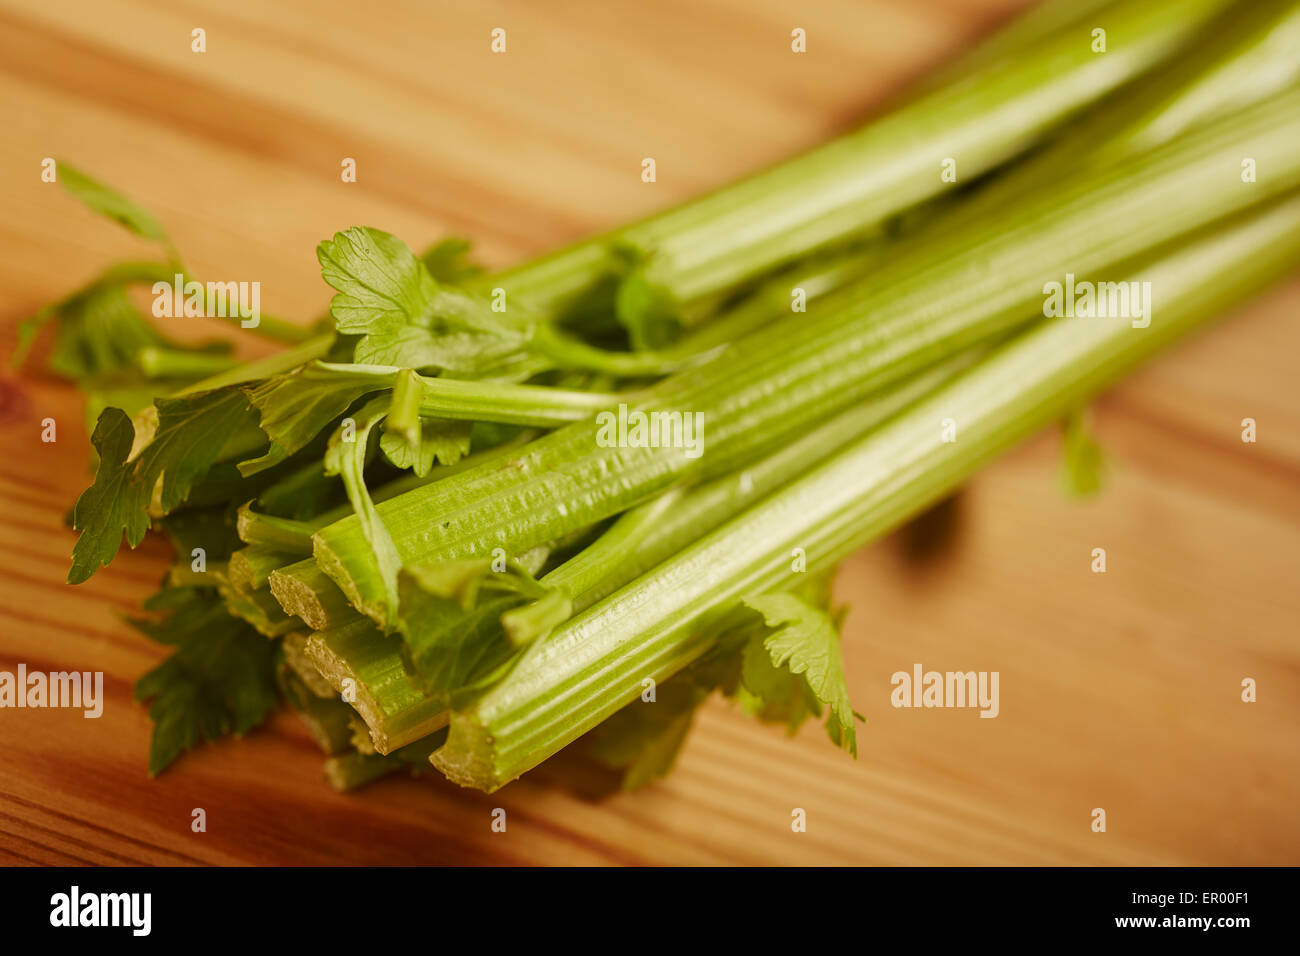 a head of American celery Stock Photo